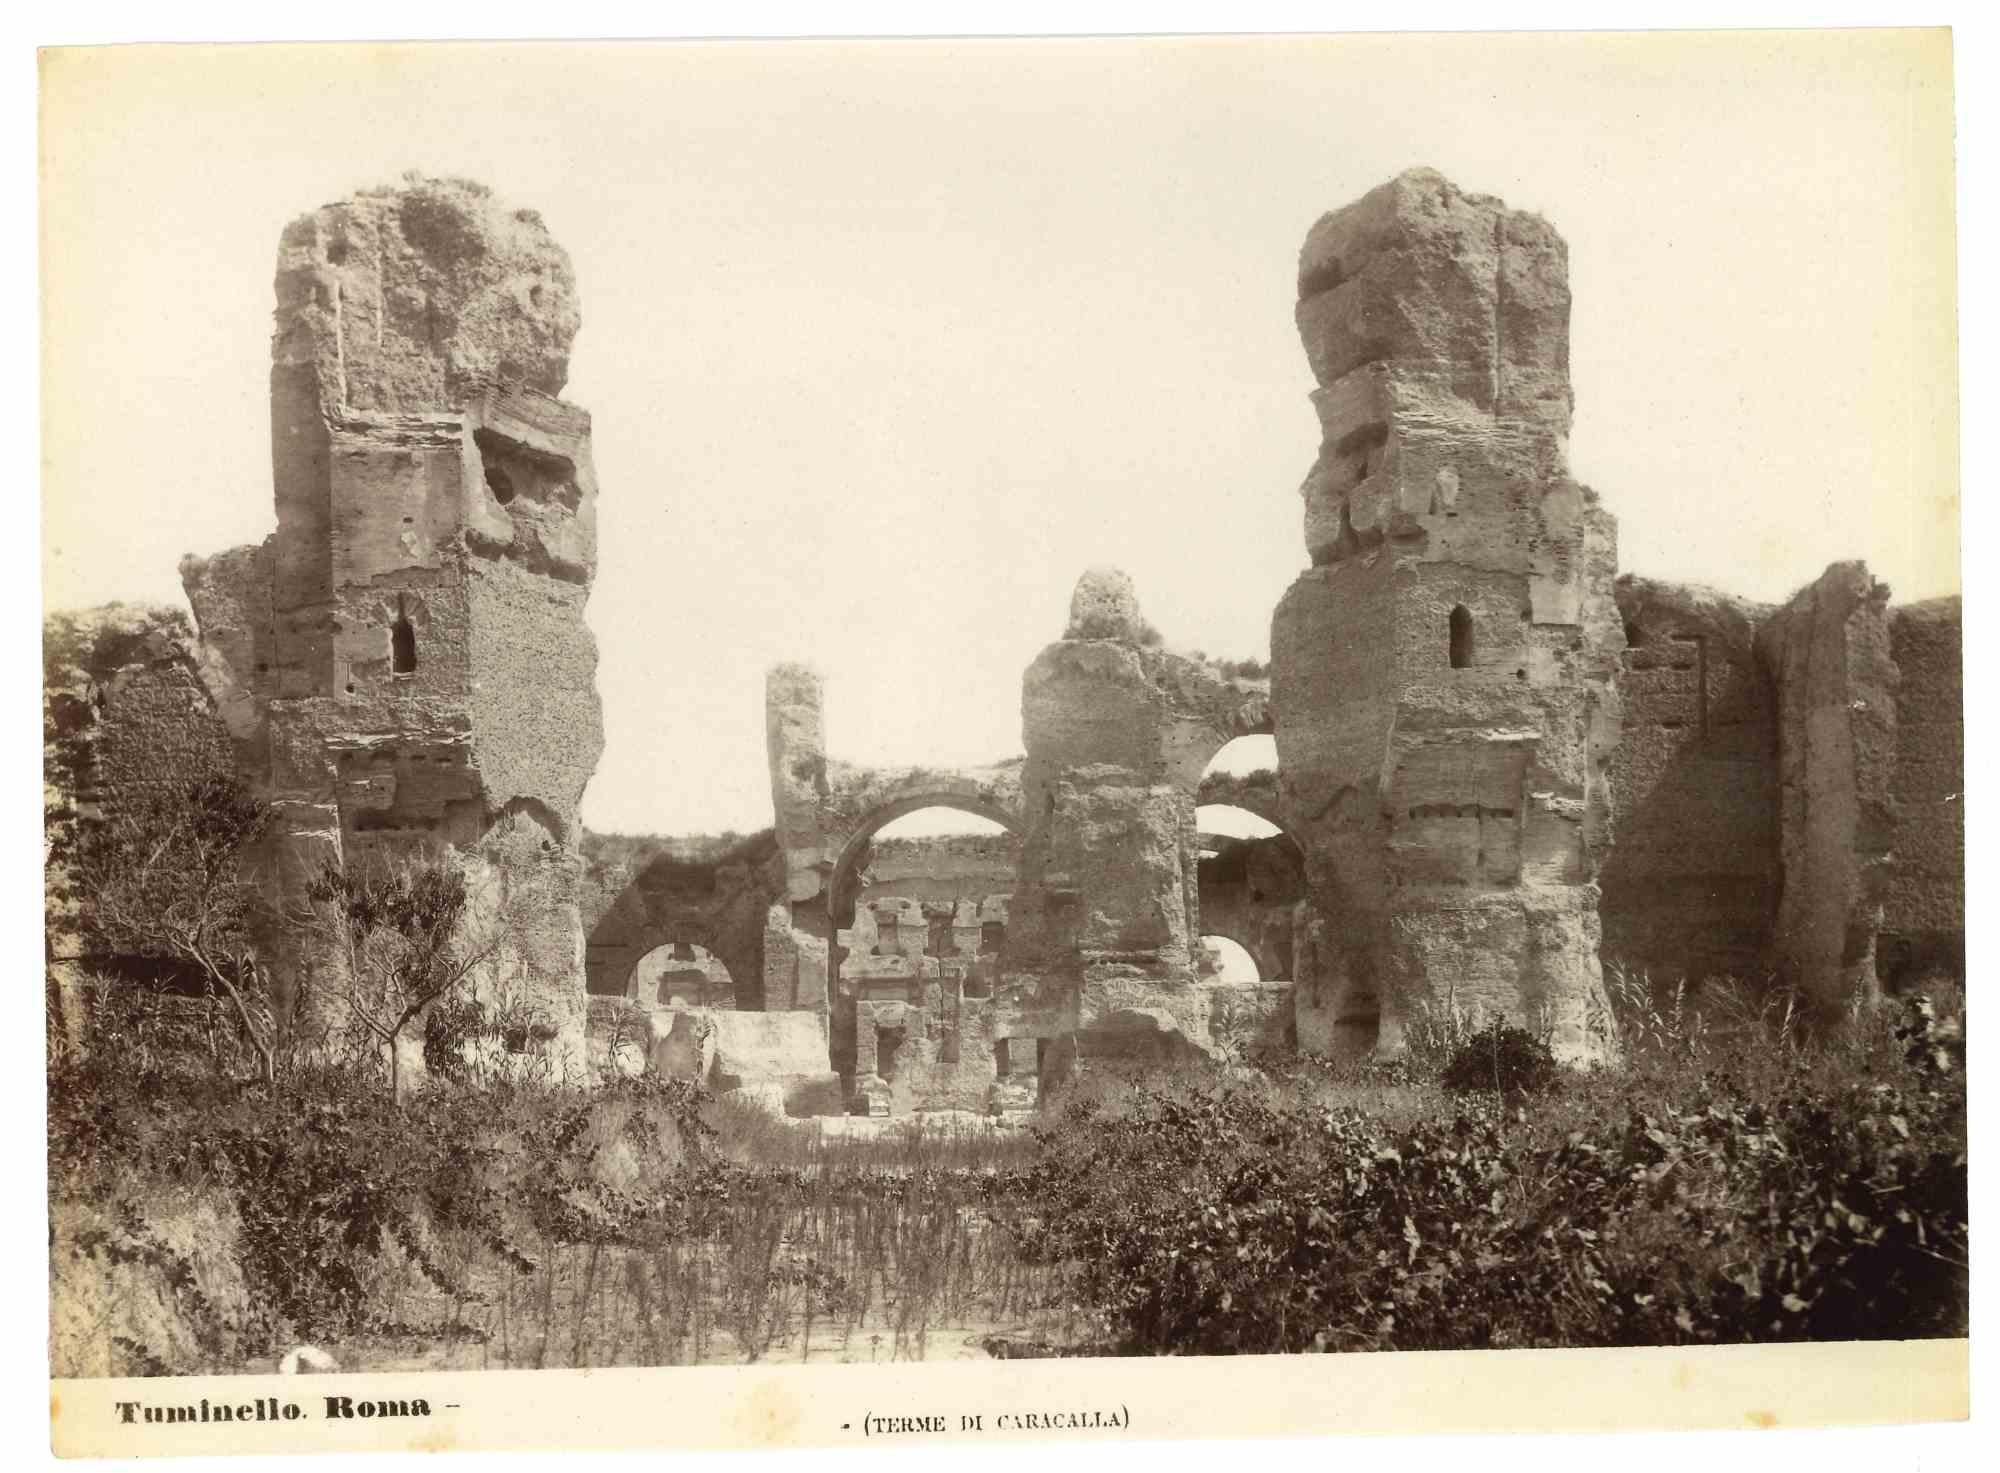 Lodovico Tuminello Landscape Photograph - Baths of Caracalla - Vintage Photography L. Tuminello - Early 20th Century